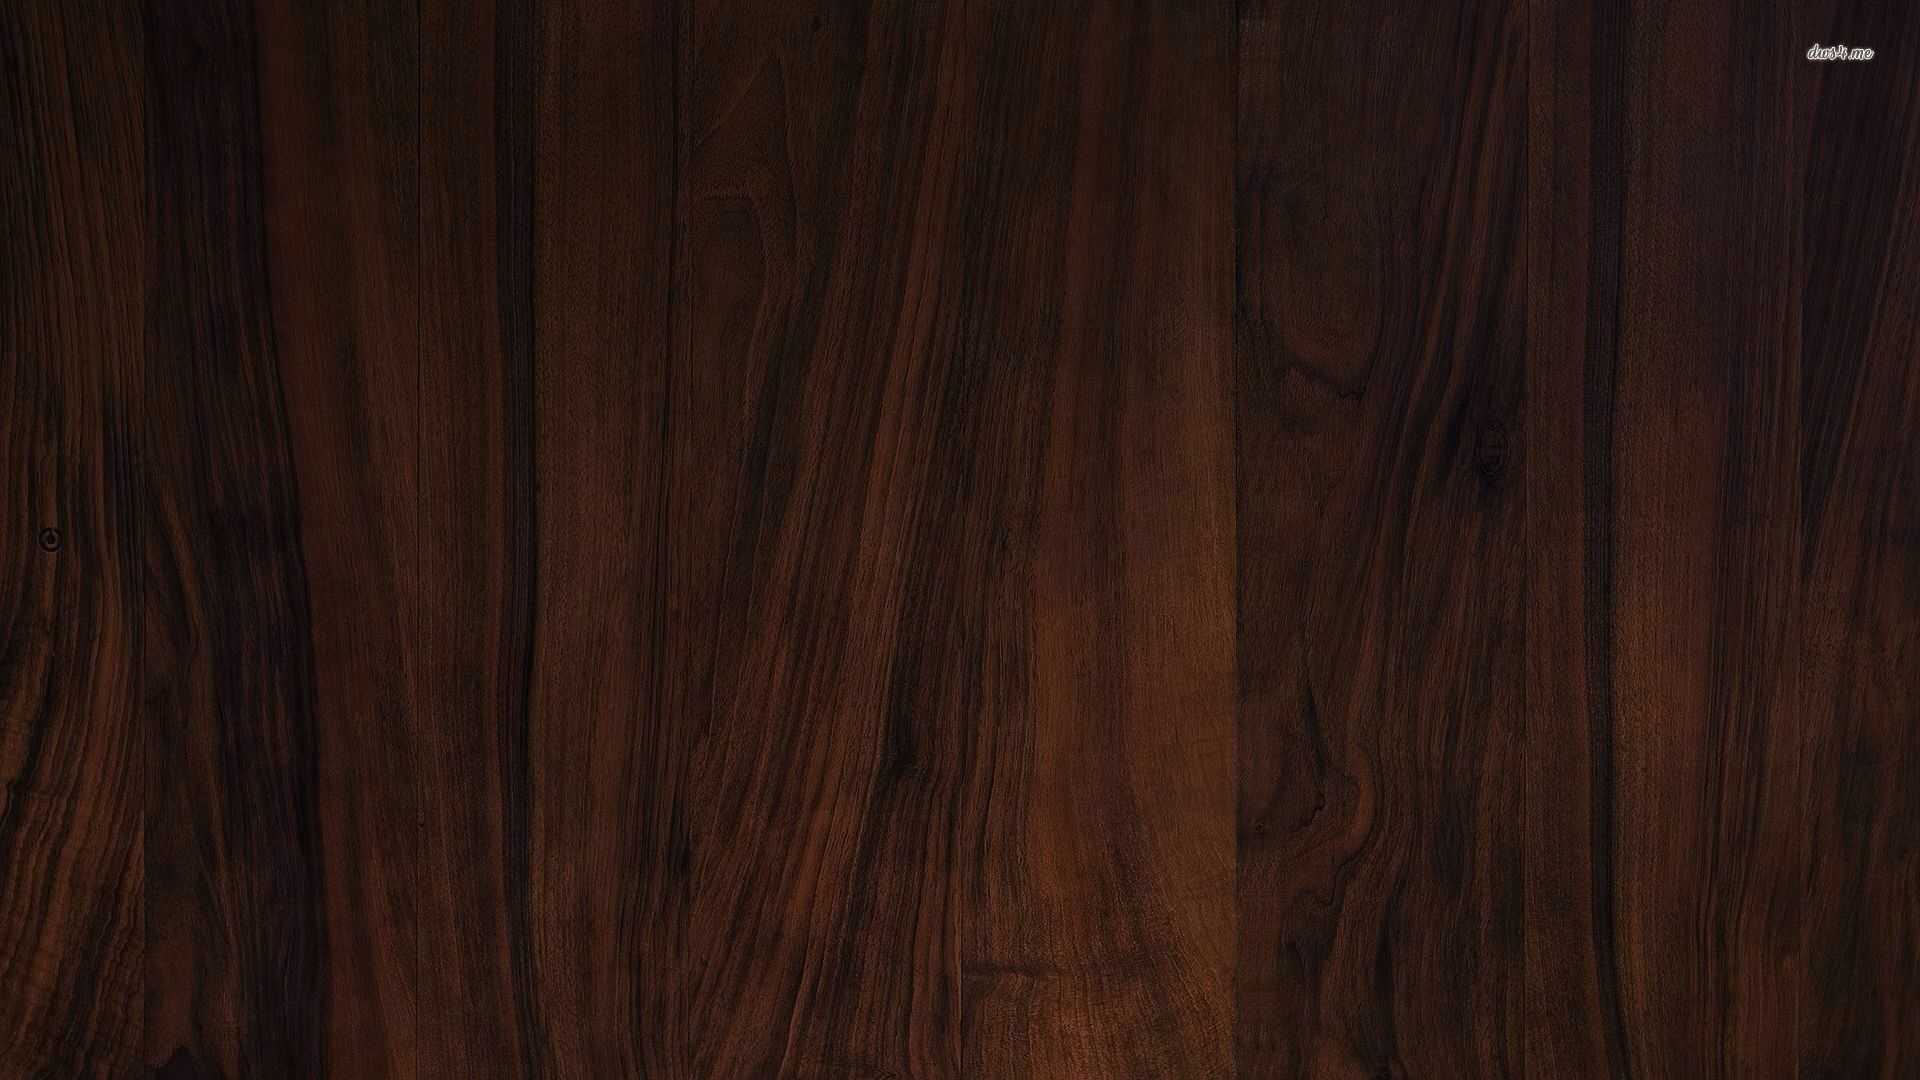 1920x1080 i love this color of the wood. | Dark wood texture, Wood wallpaper, Oak wood texture